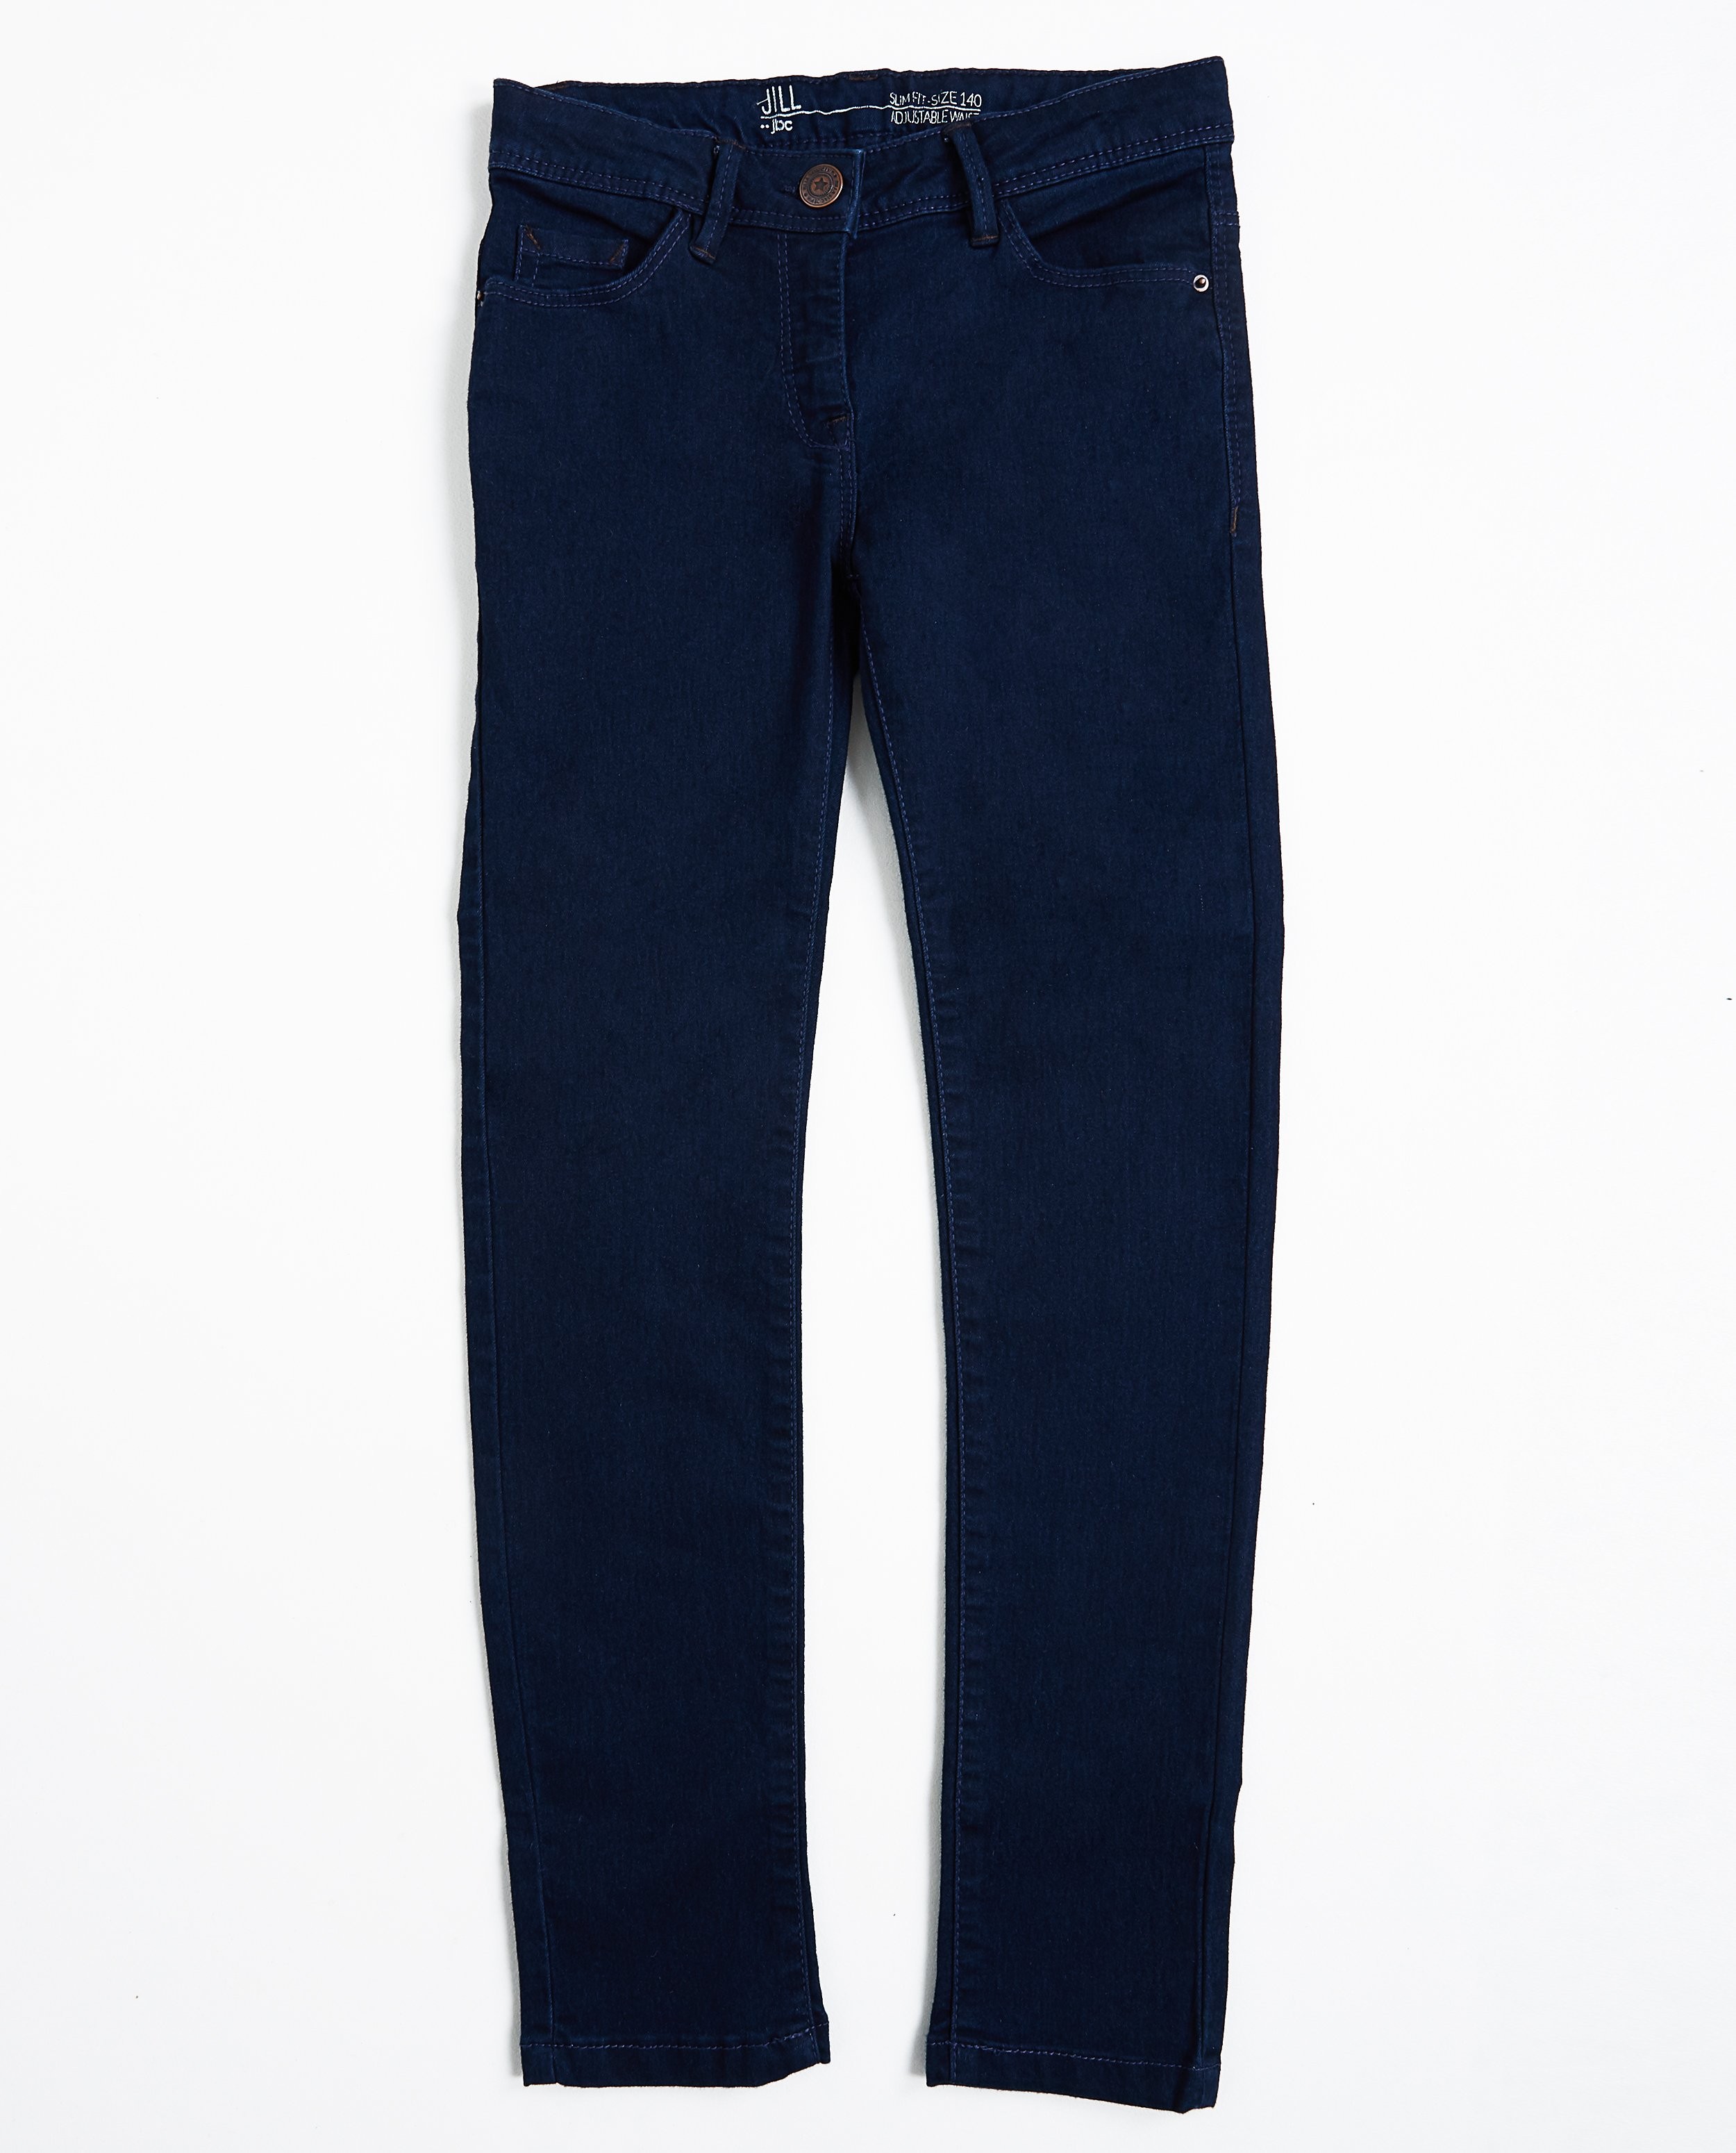 Jeans slim bleu marine - null - JBC